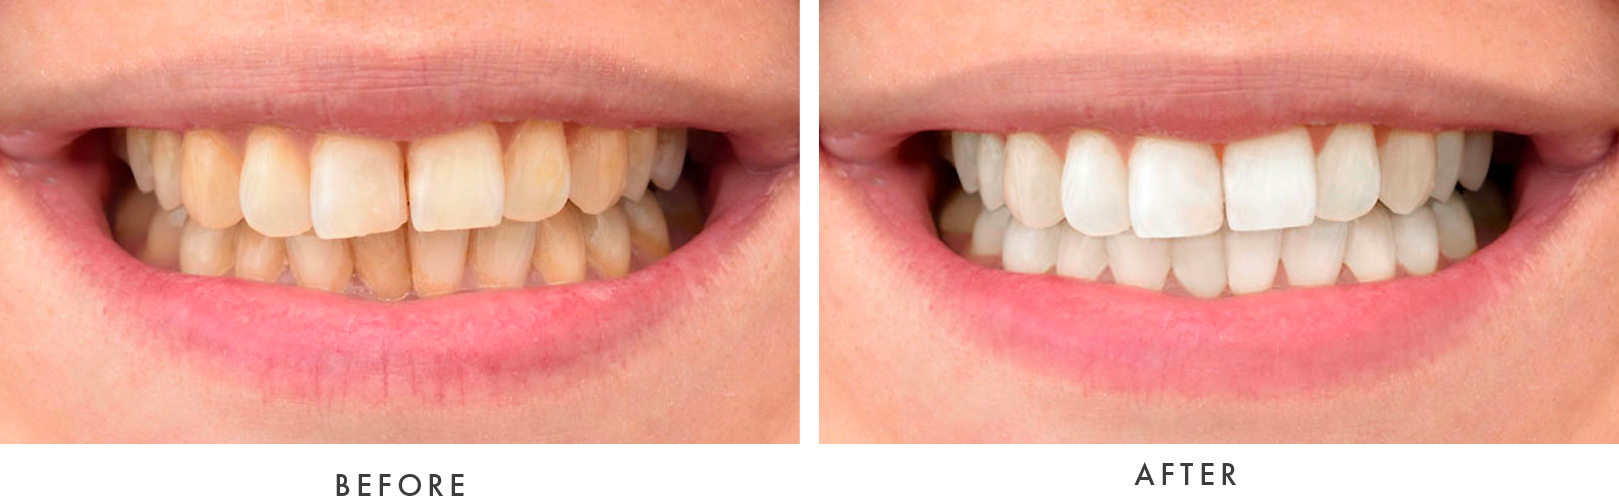 teeth whitening 1